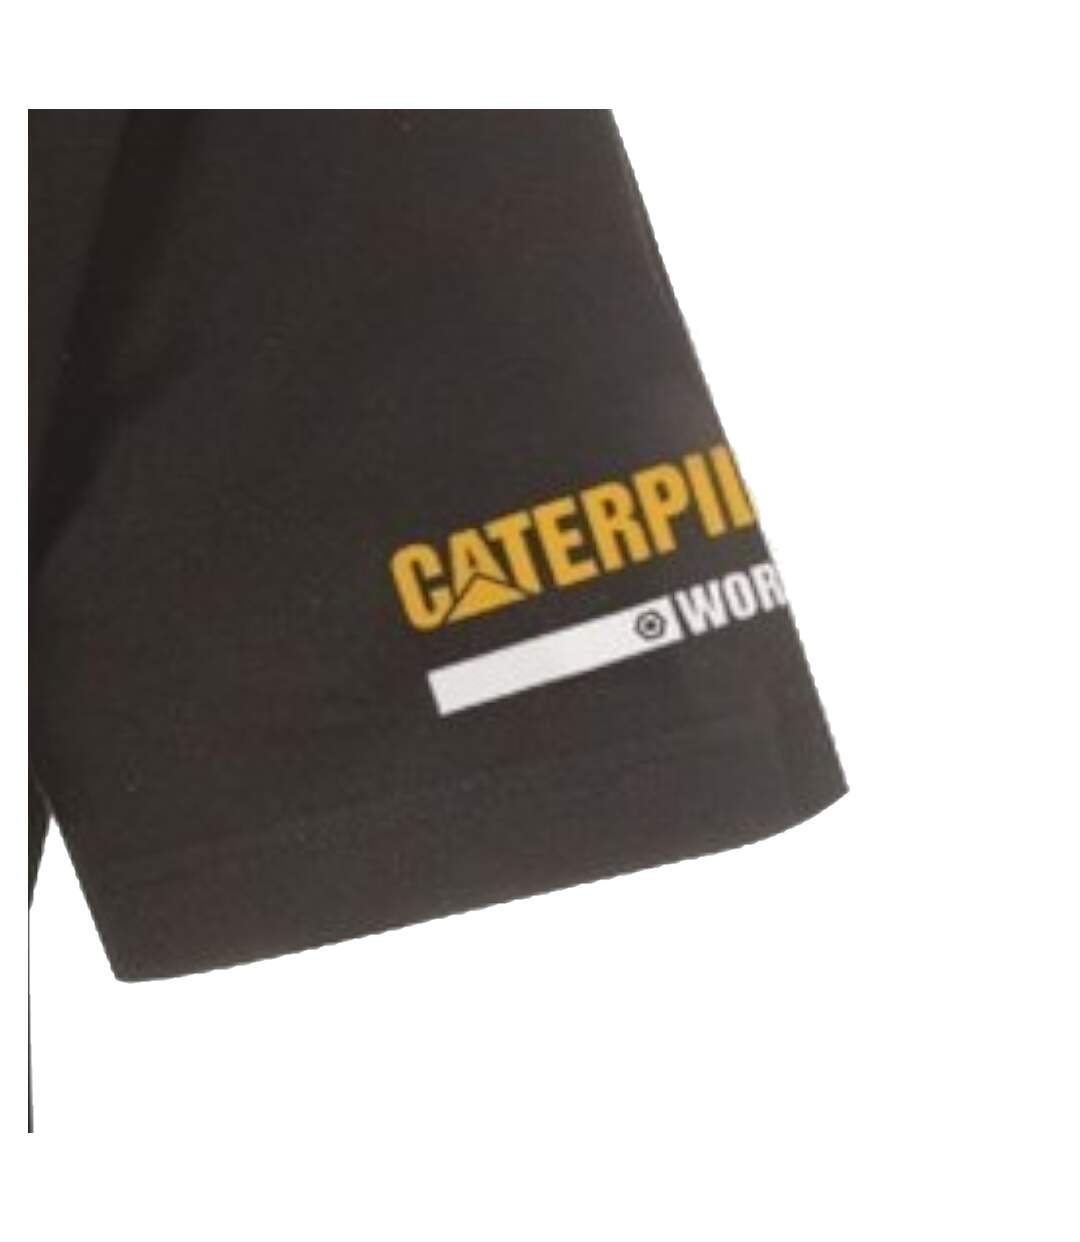 Caterpillar - T-shirt manches courtes ESSENTIALS - Homme (Noir) - UTFS6373